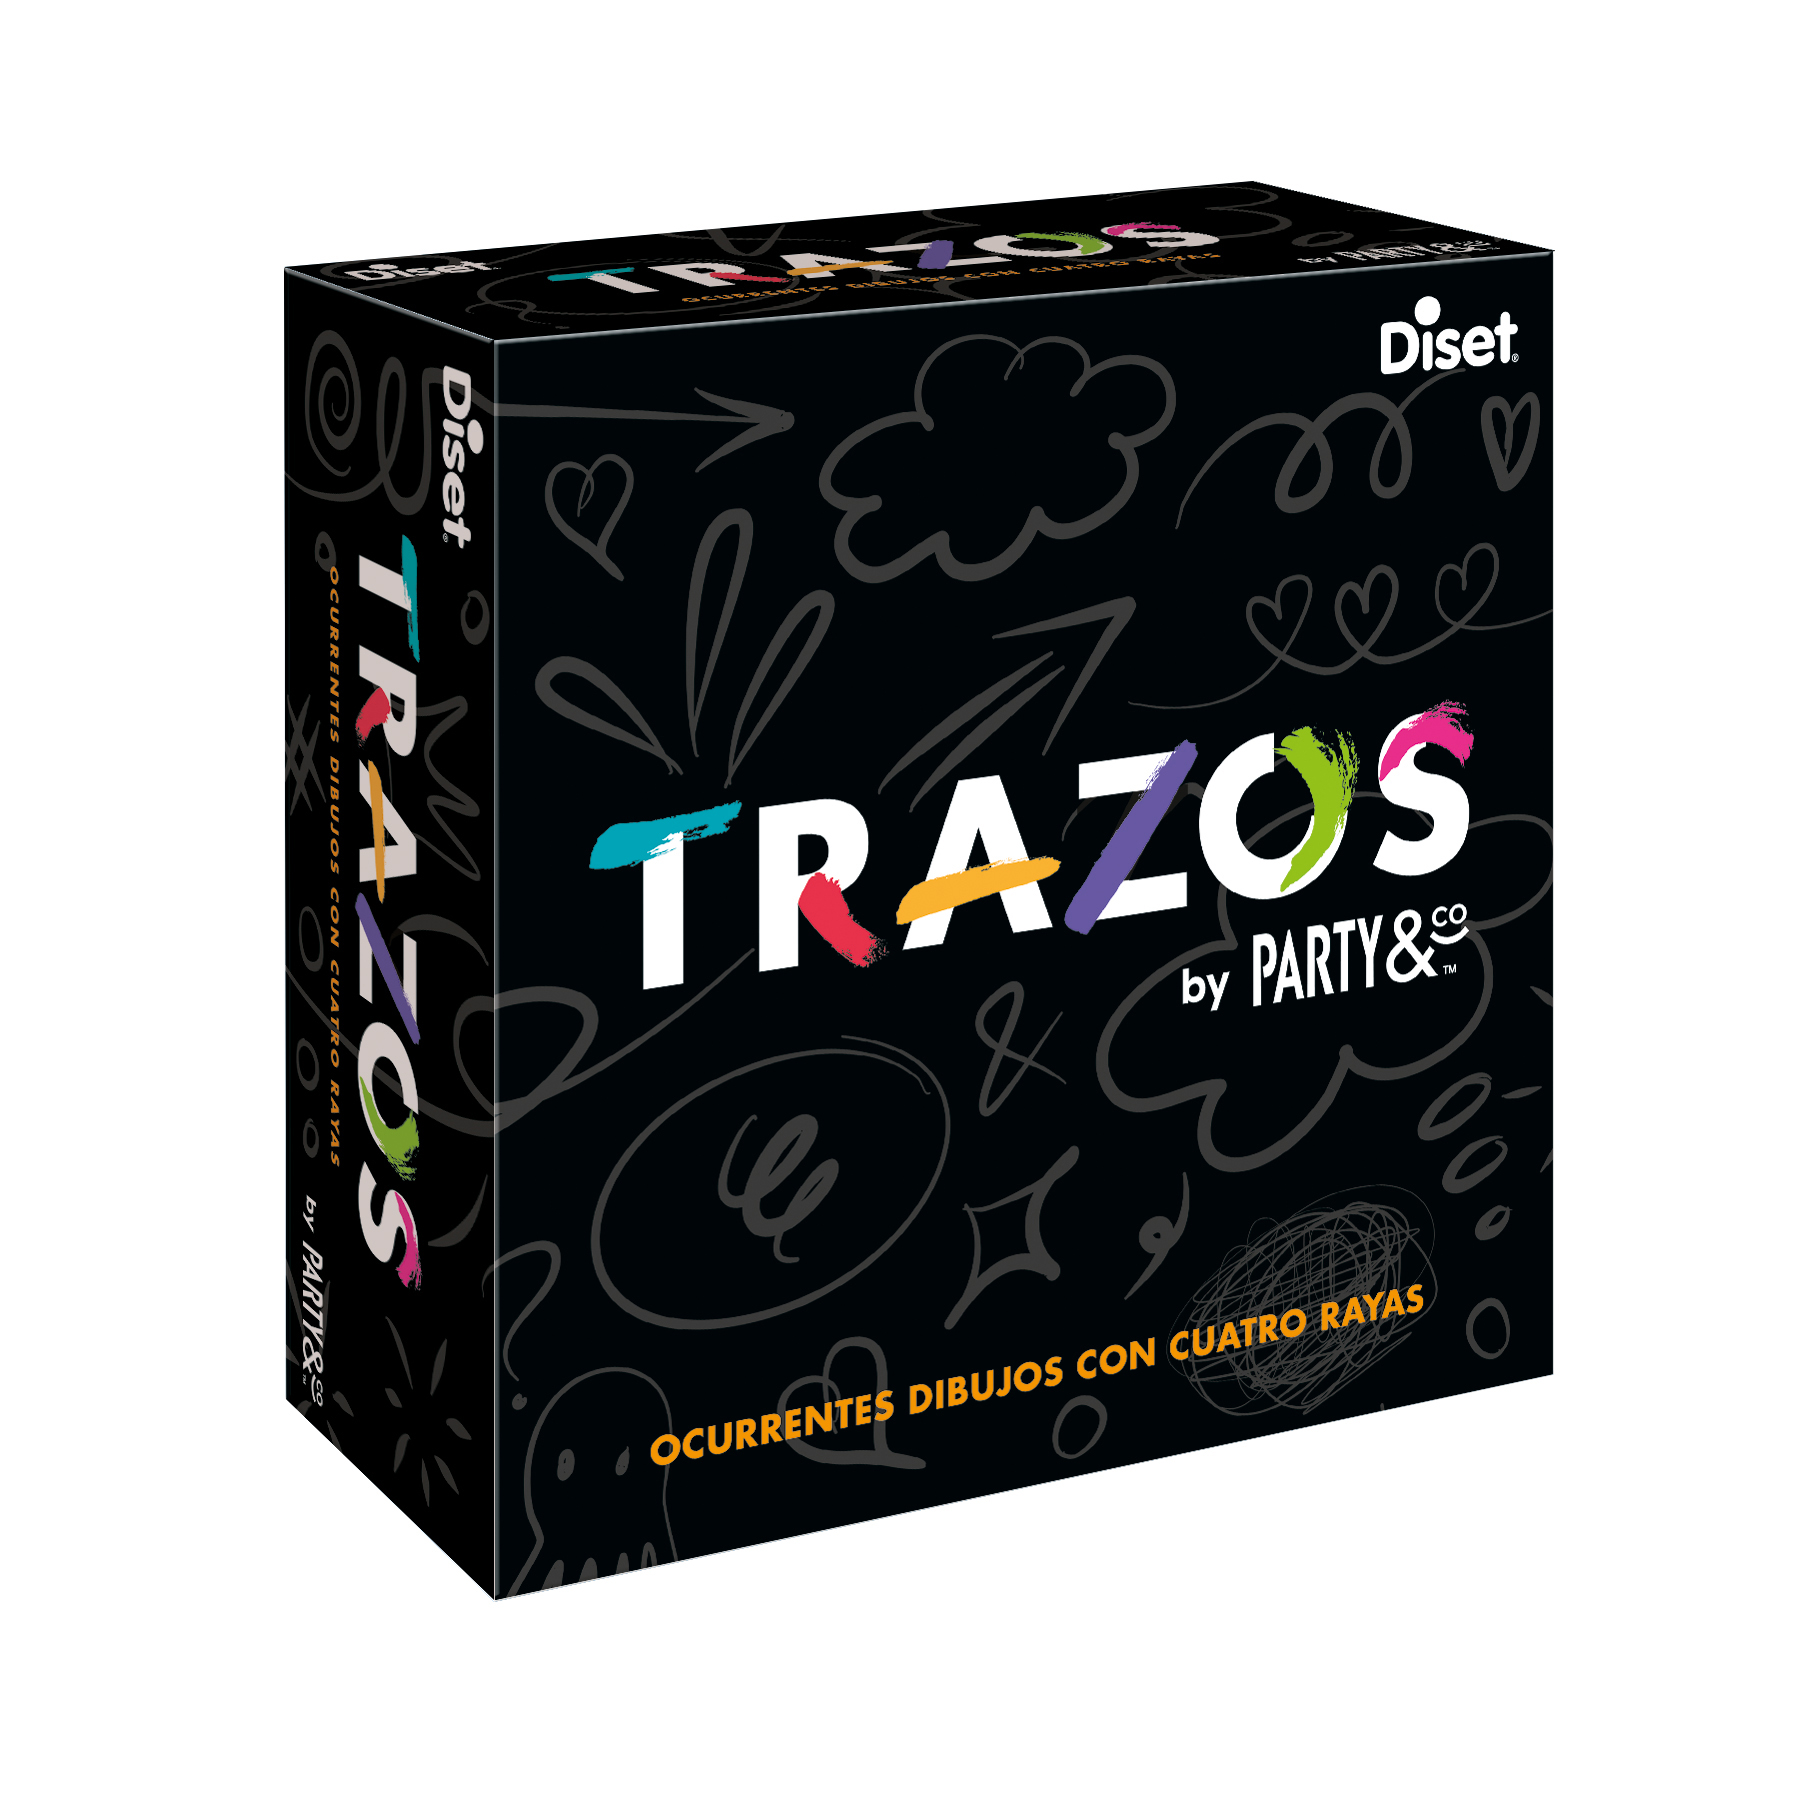 party & co trazos (diset - 10203)